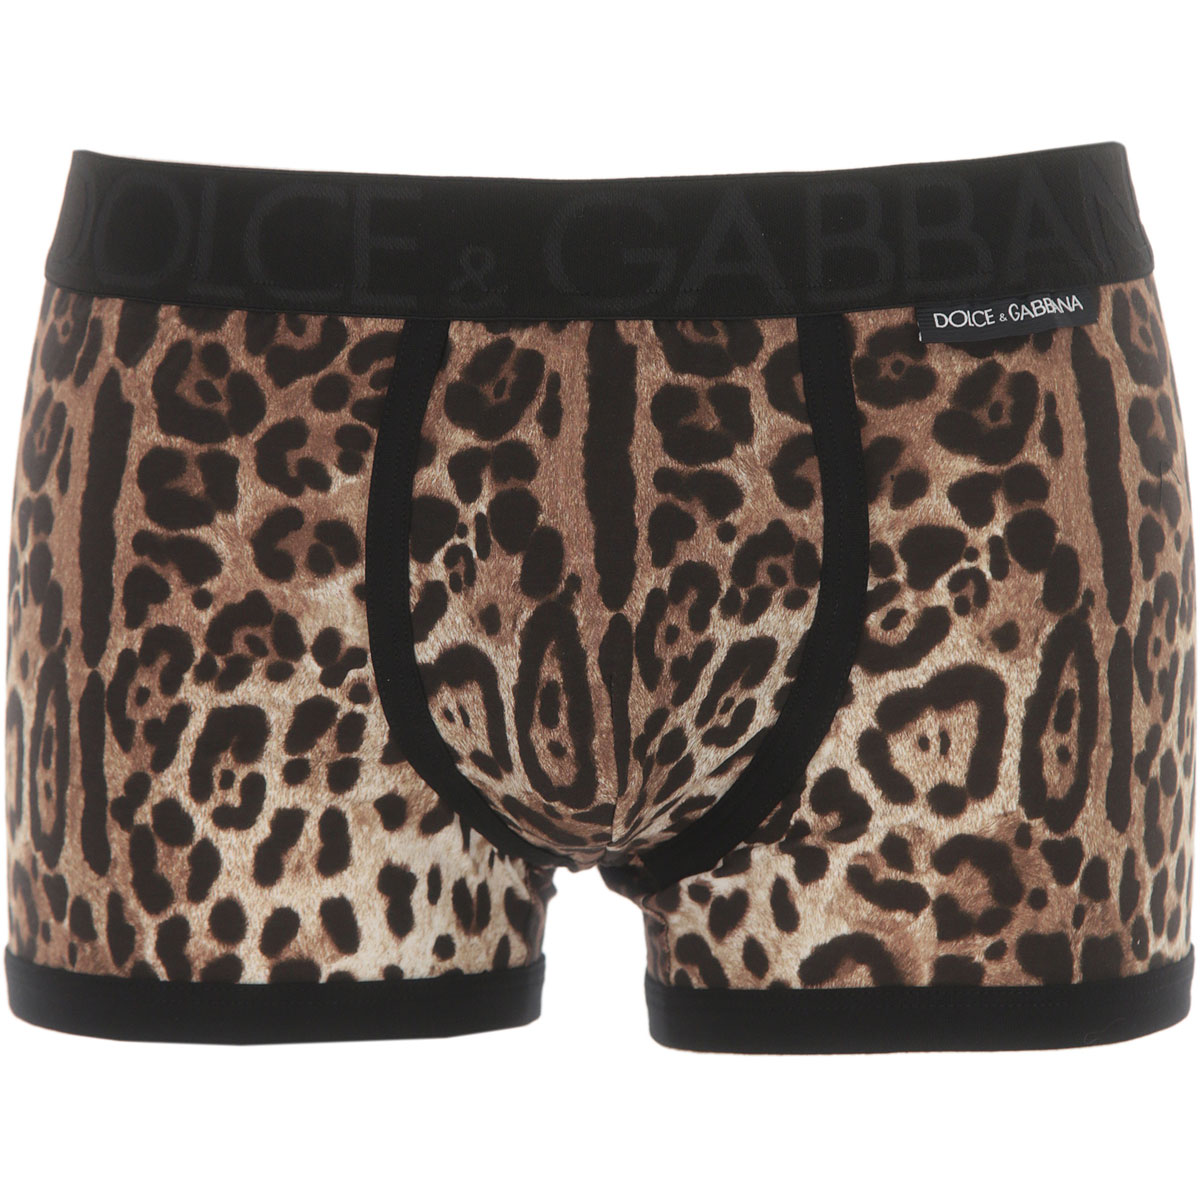 Mens Underwear Dolce & Gabbana, Style code: m4d19j-fsgwf-ha93m